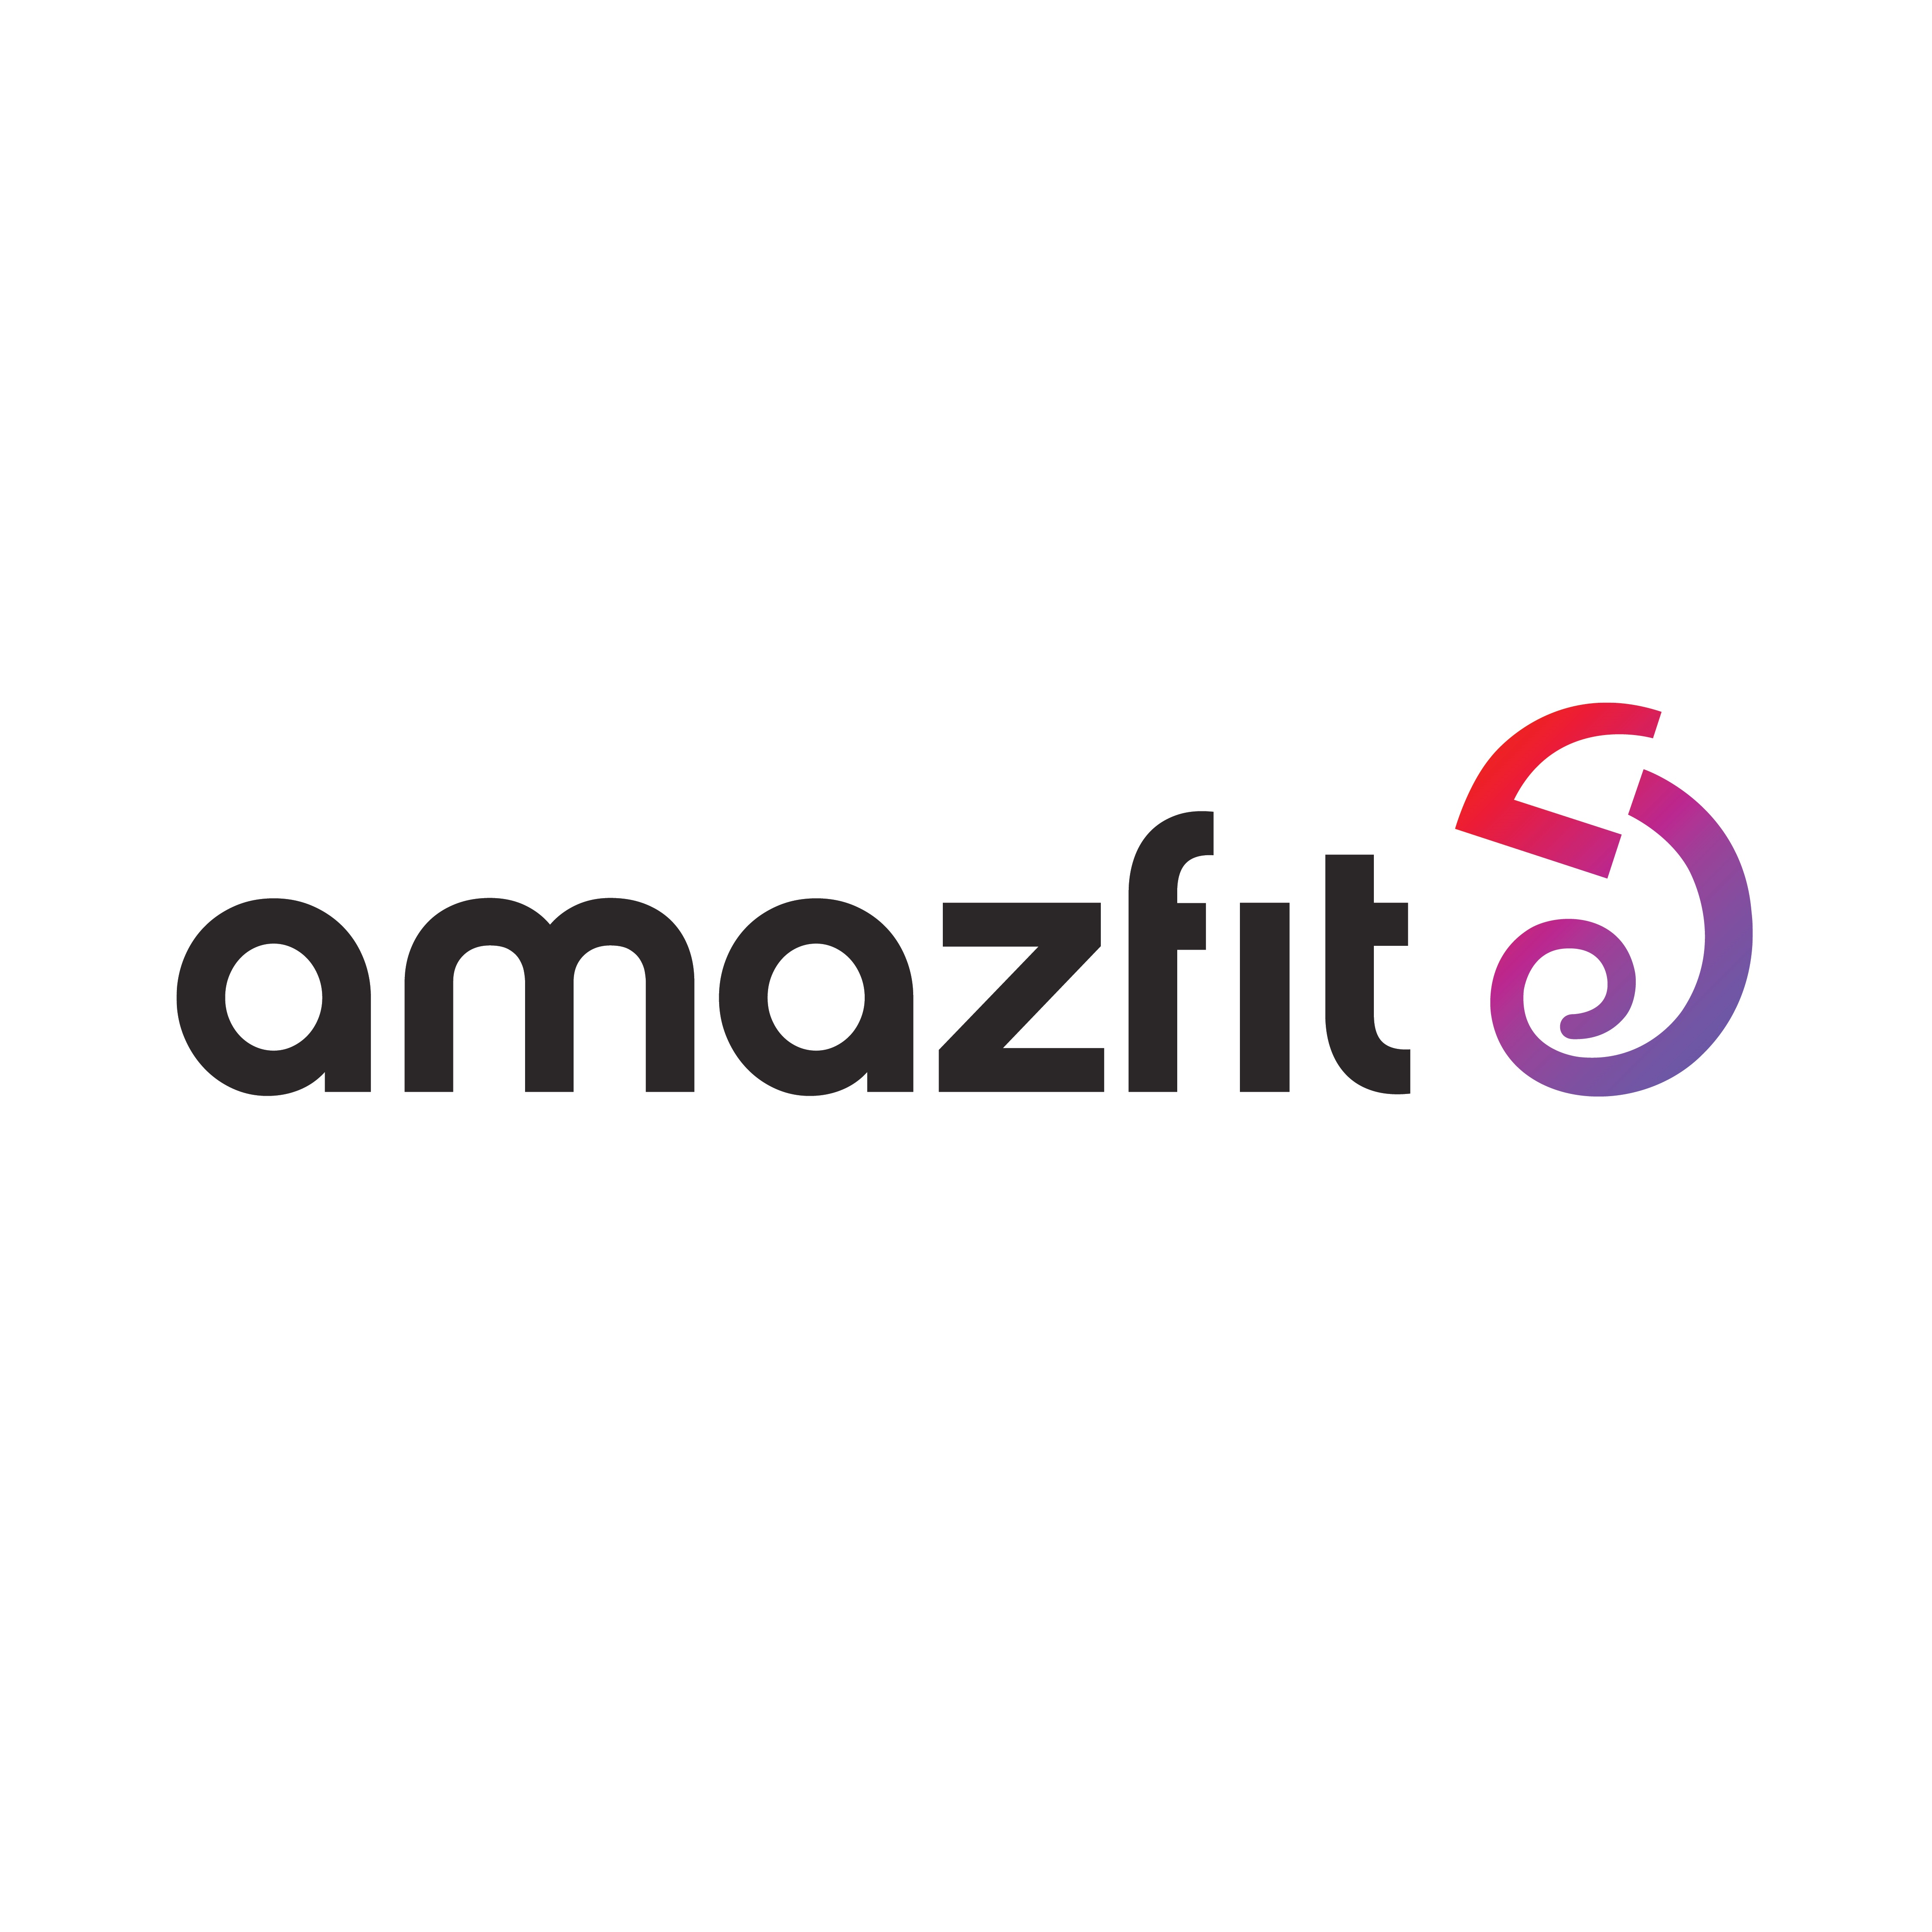 Amazfit Official Store